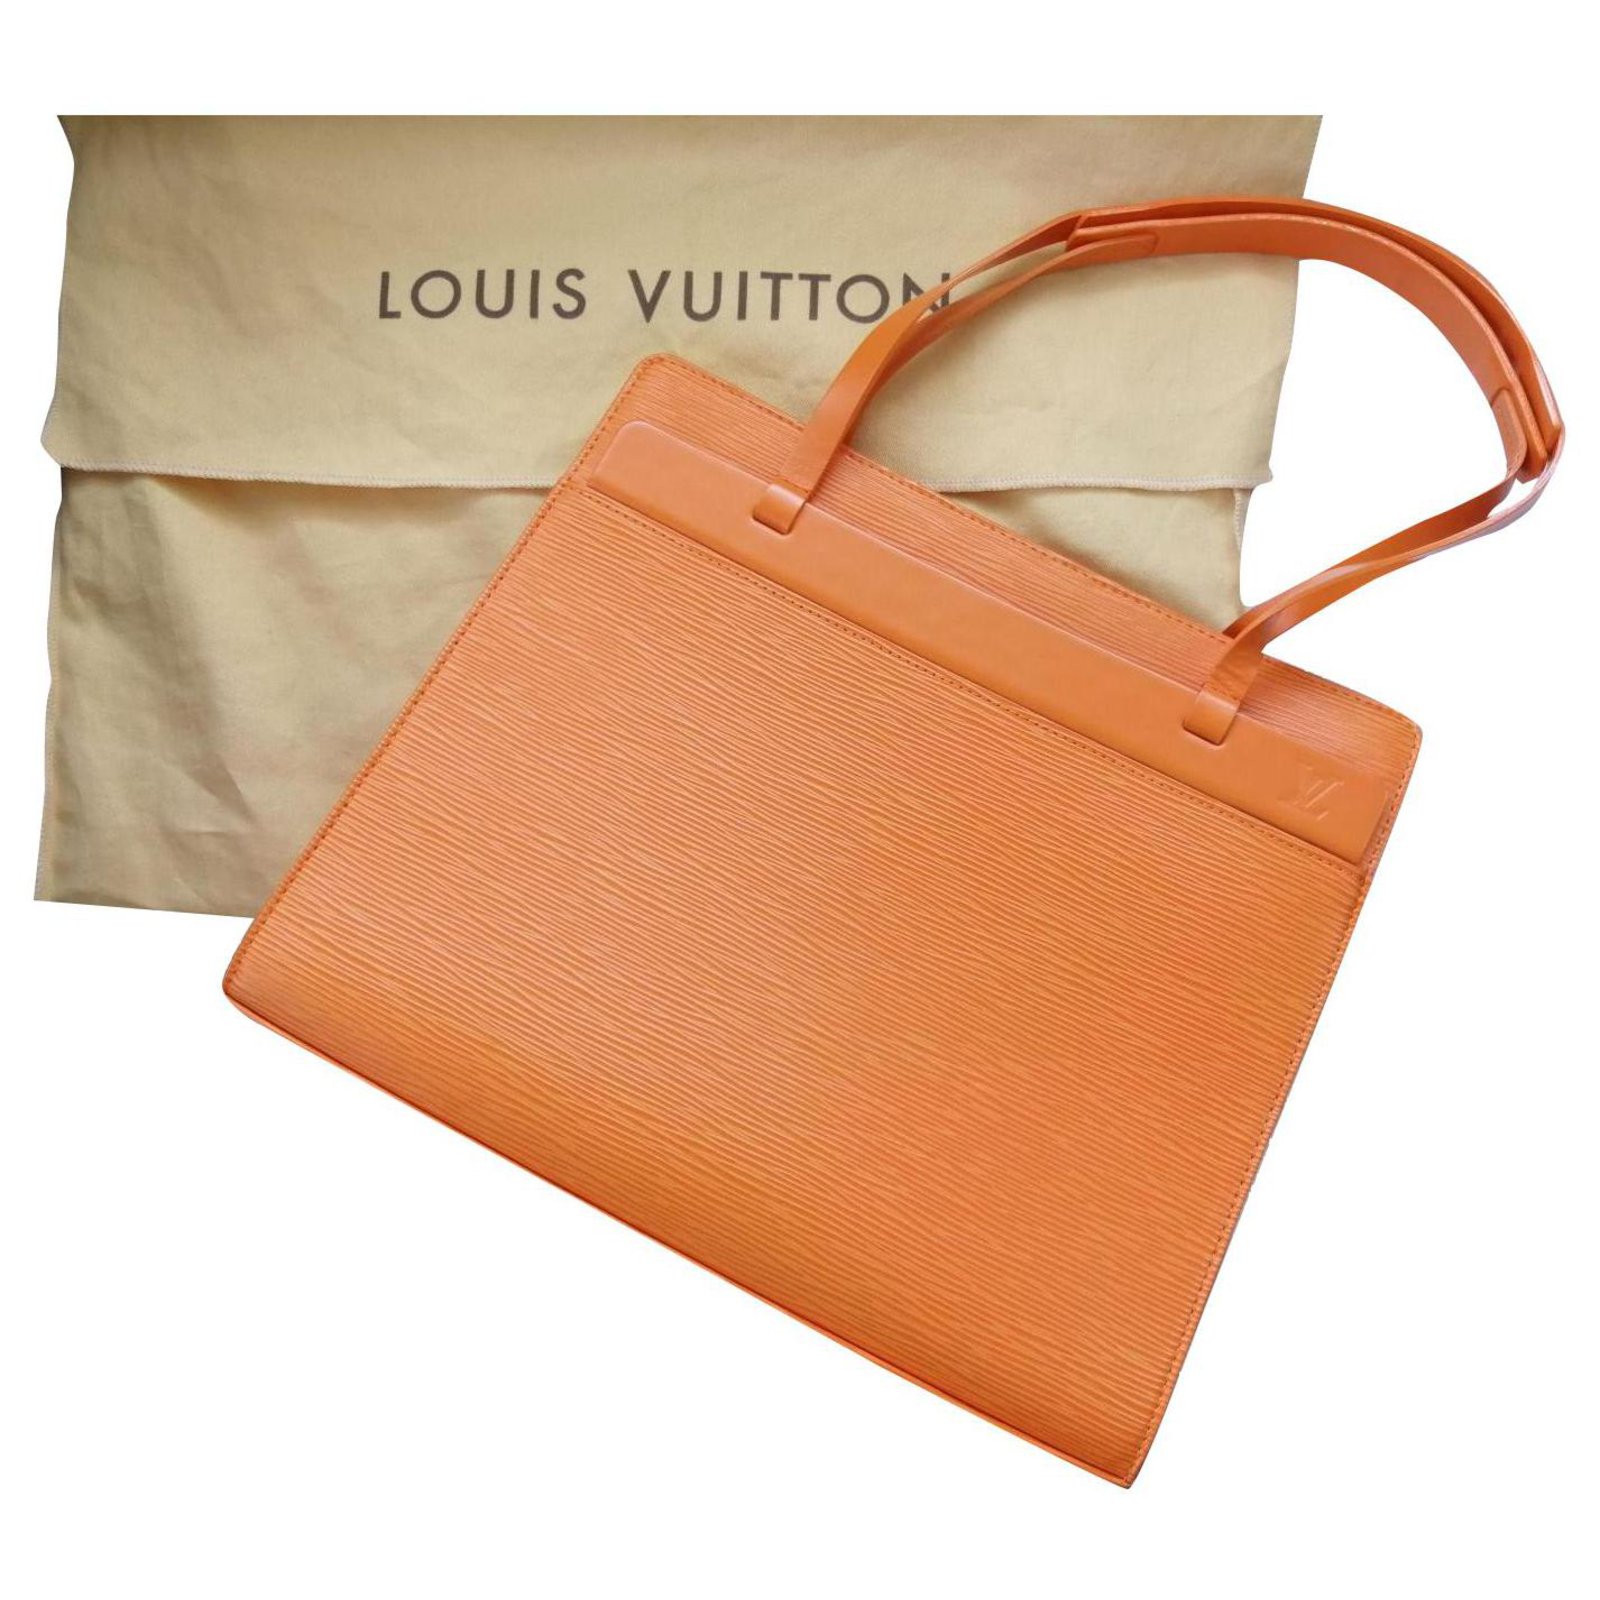 Louis Vuitton, Bags, Louis Vuitton Epi Pm Tote